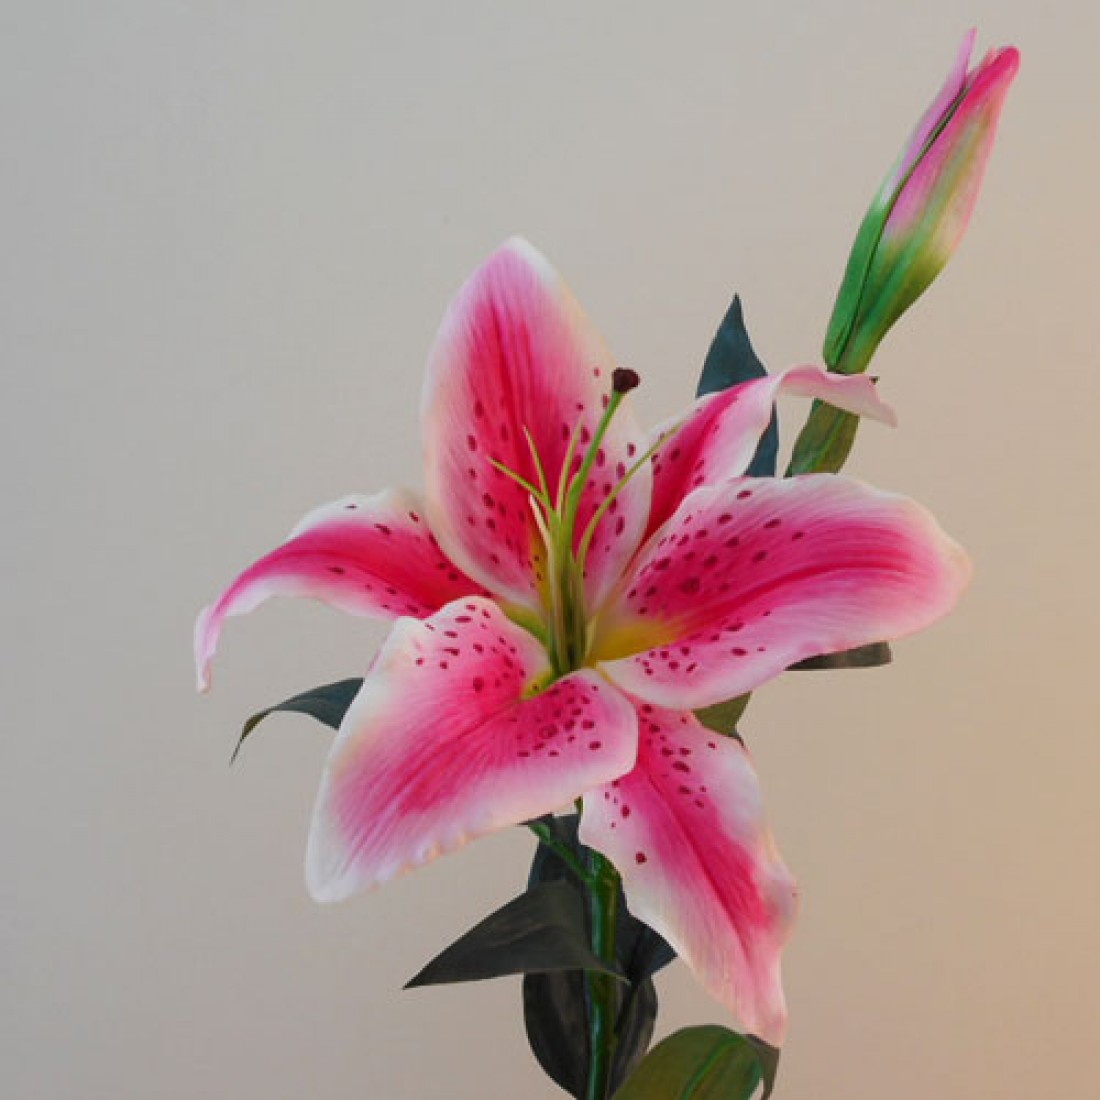 pink star gazer lilies